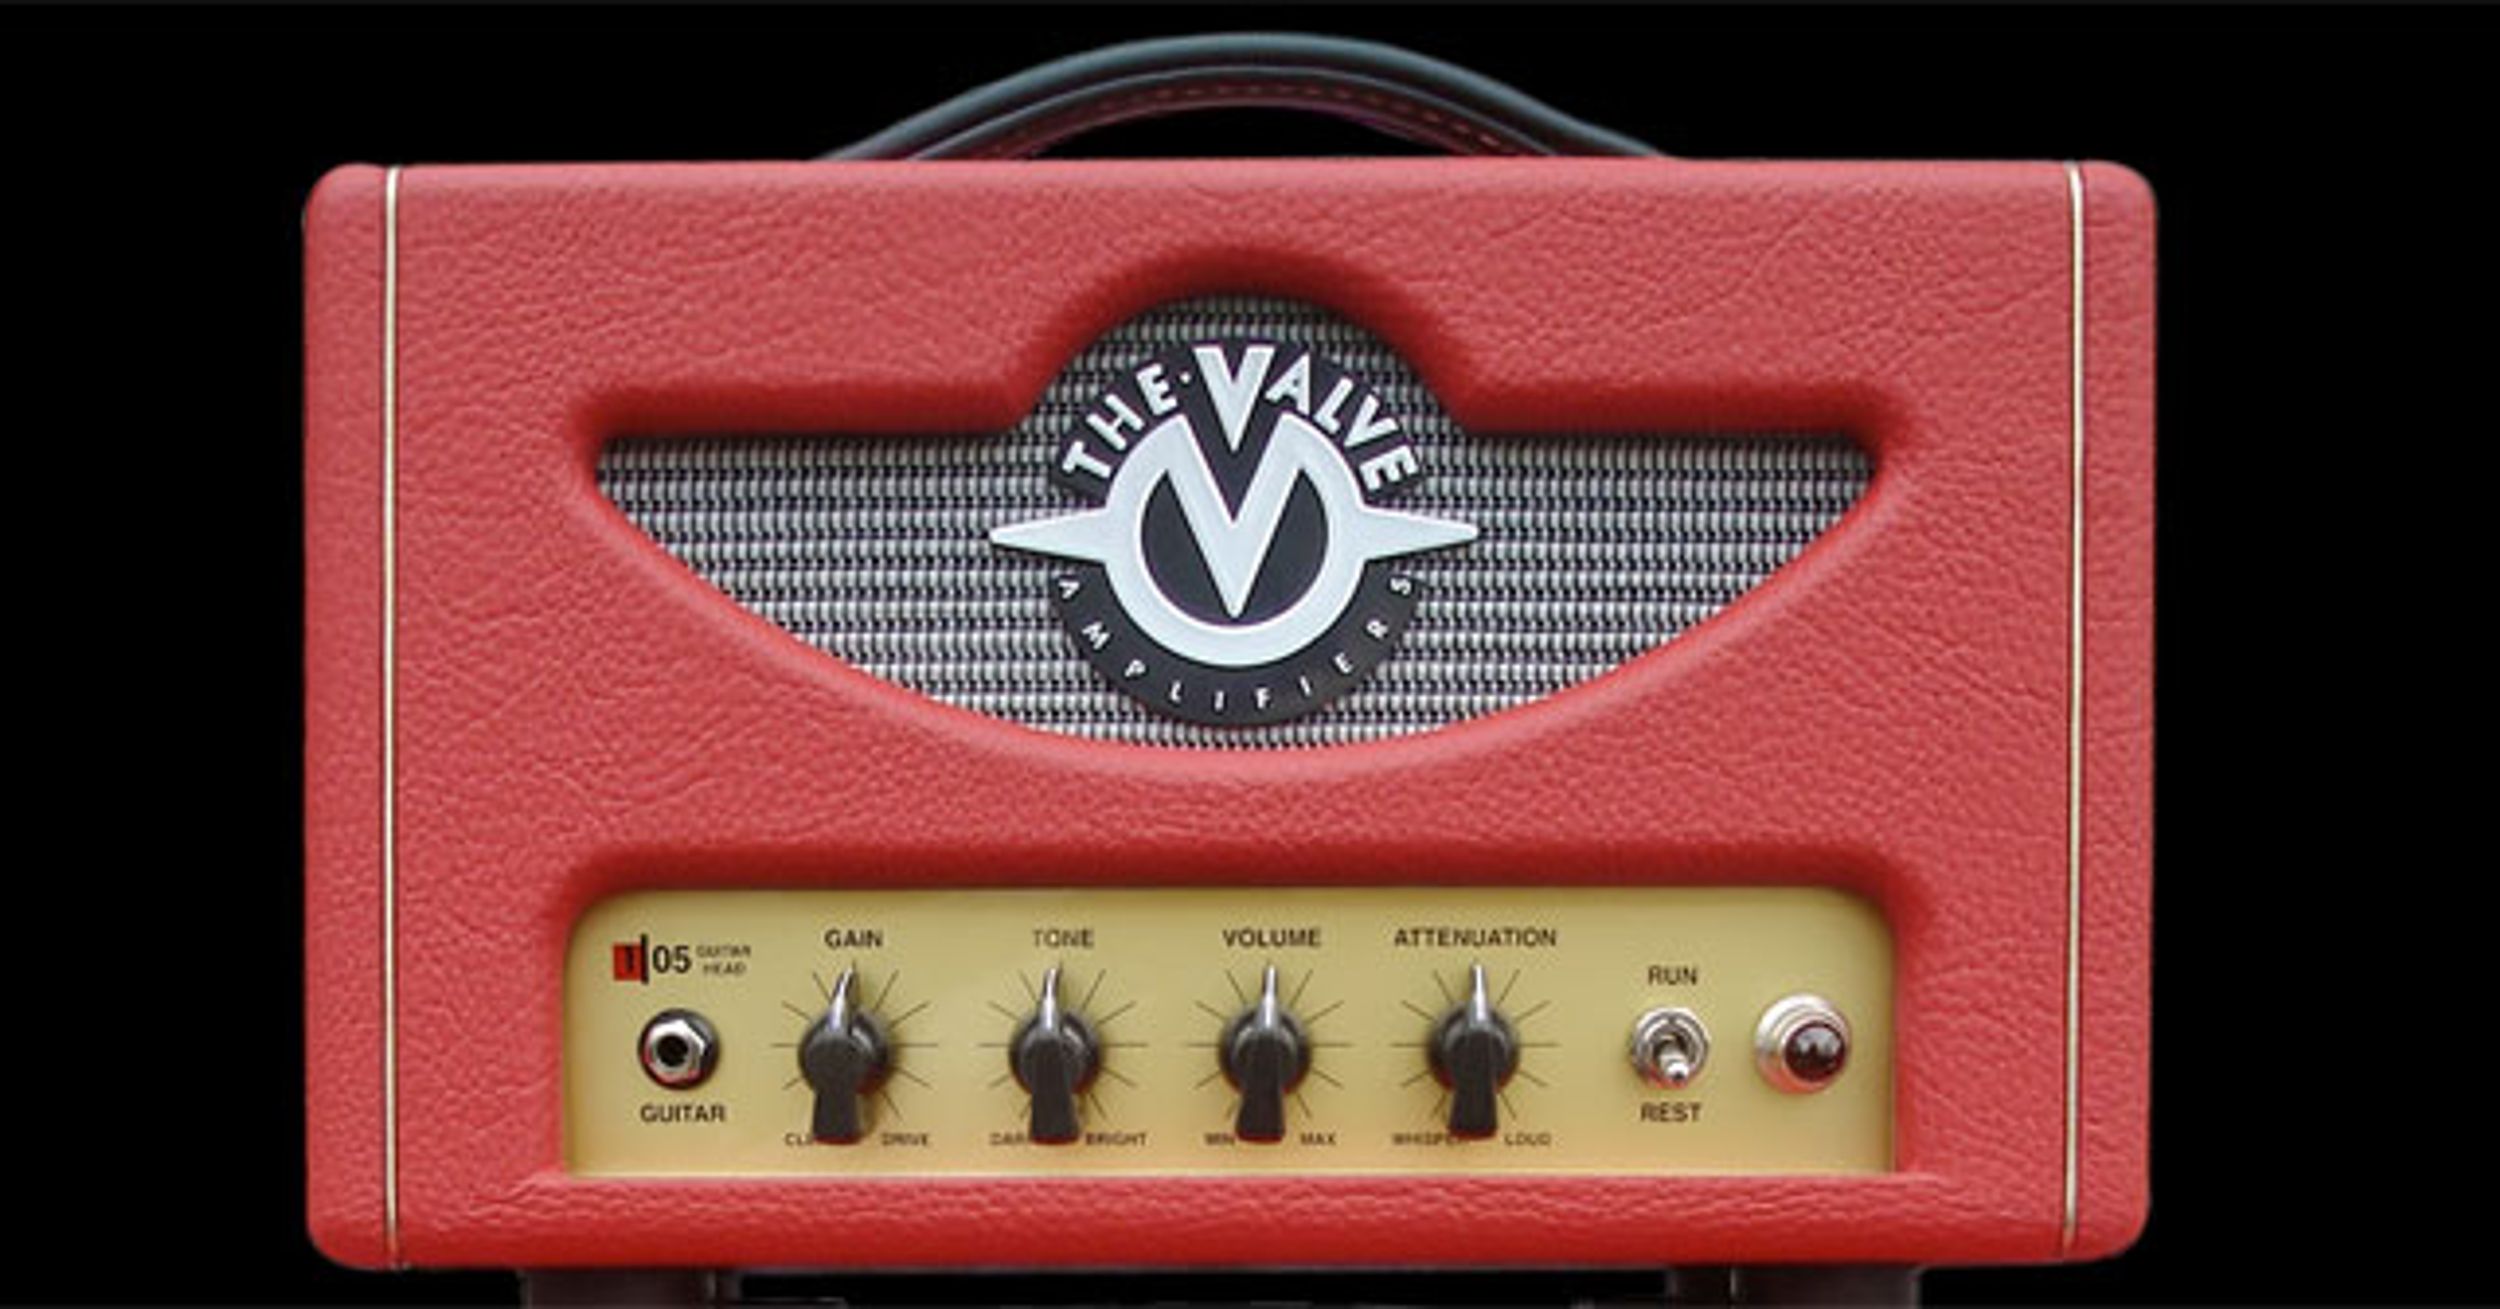 Valve Amp Model 105 "Bimbo" Amp Review 